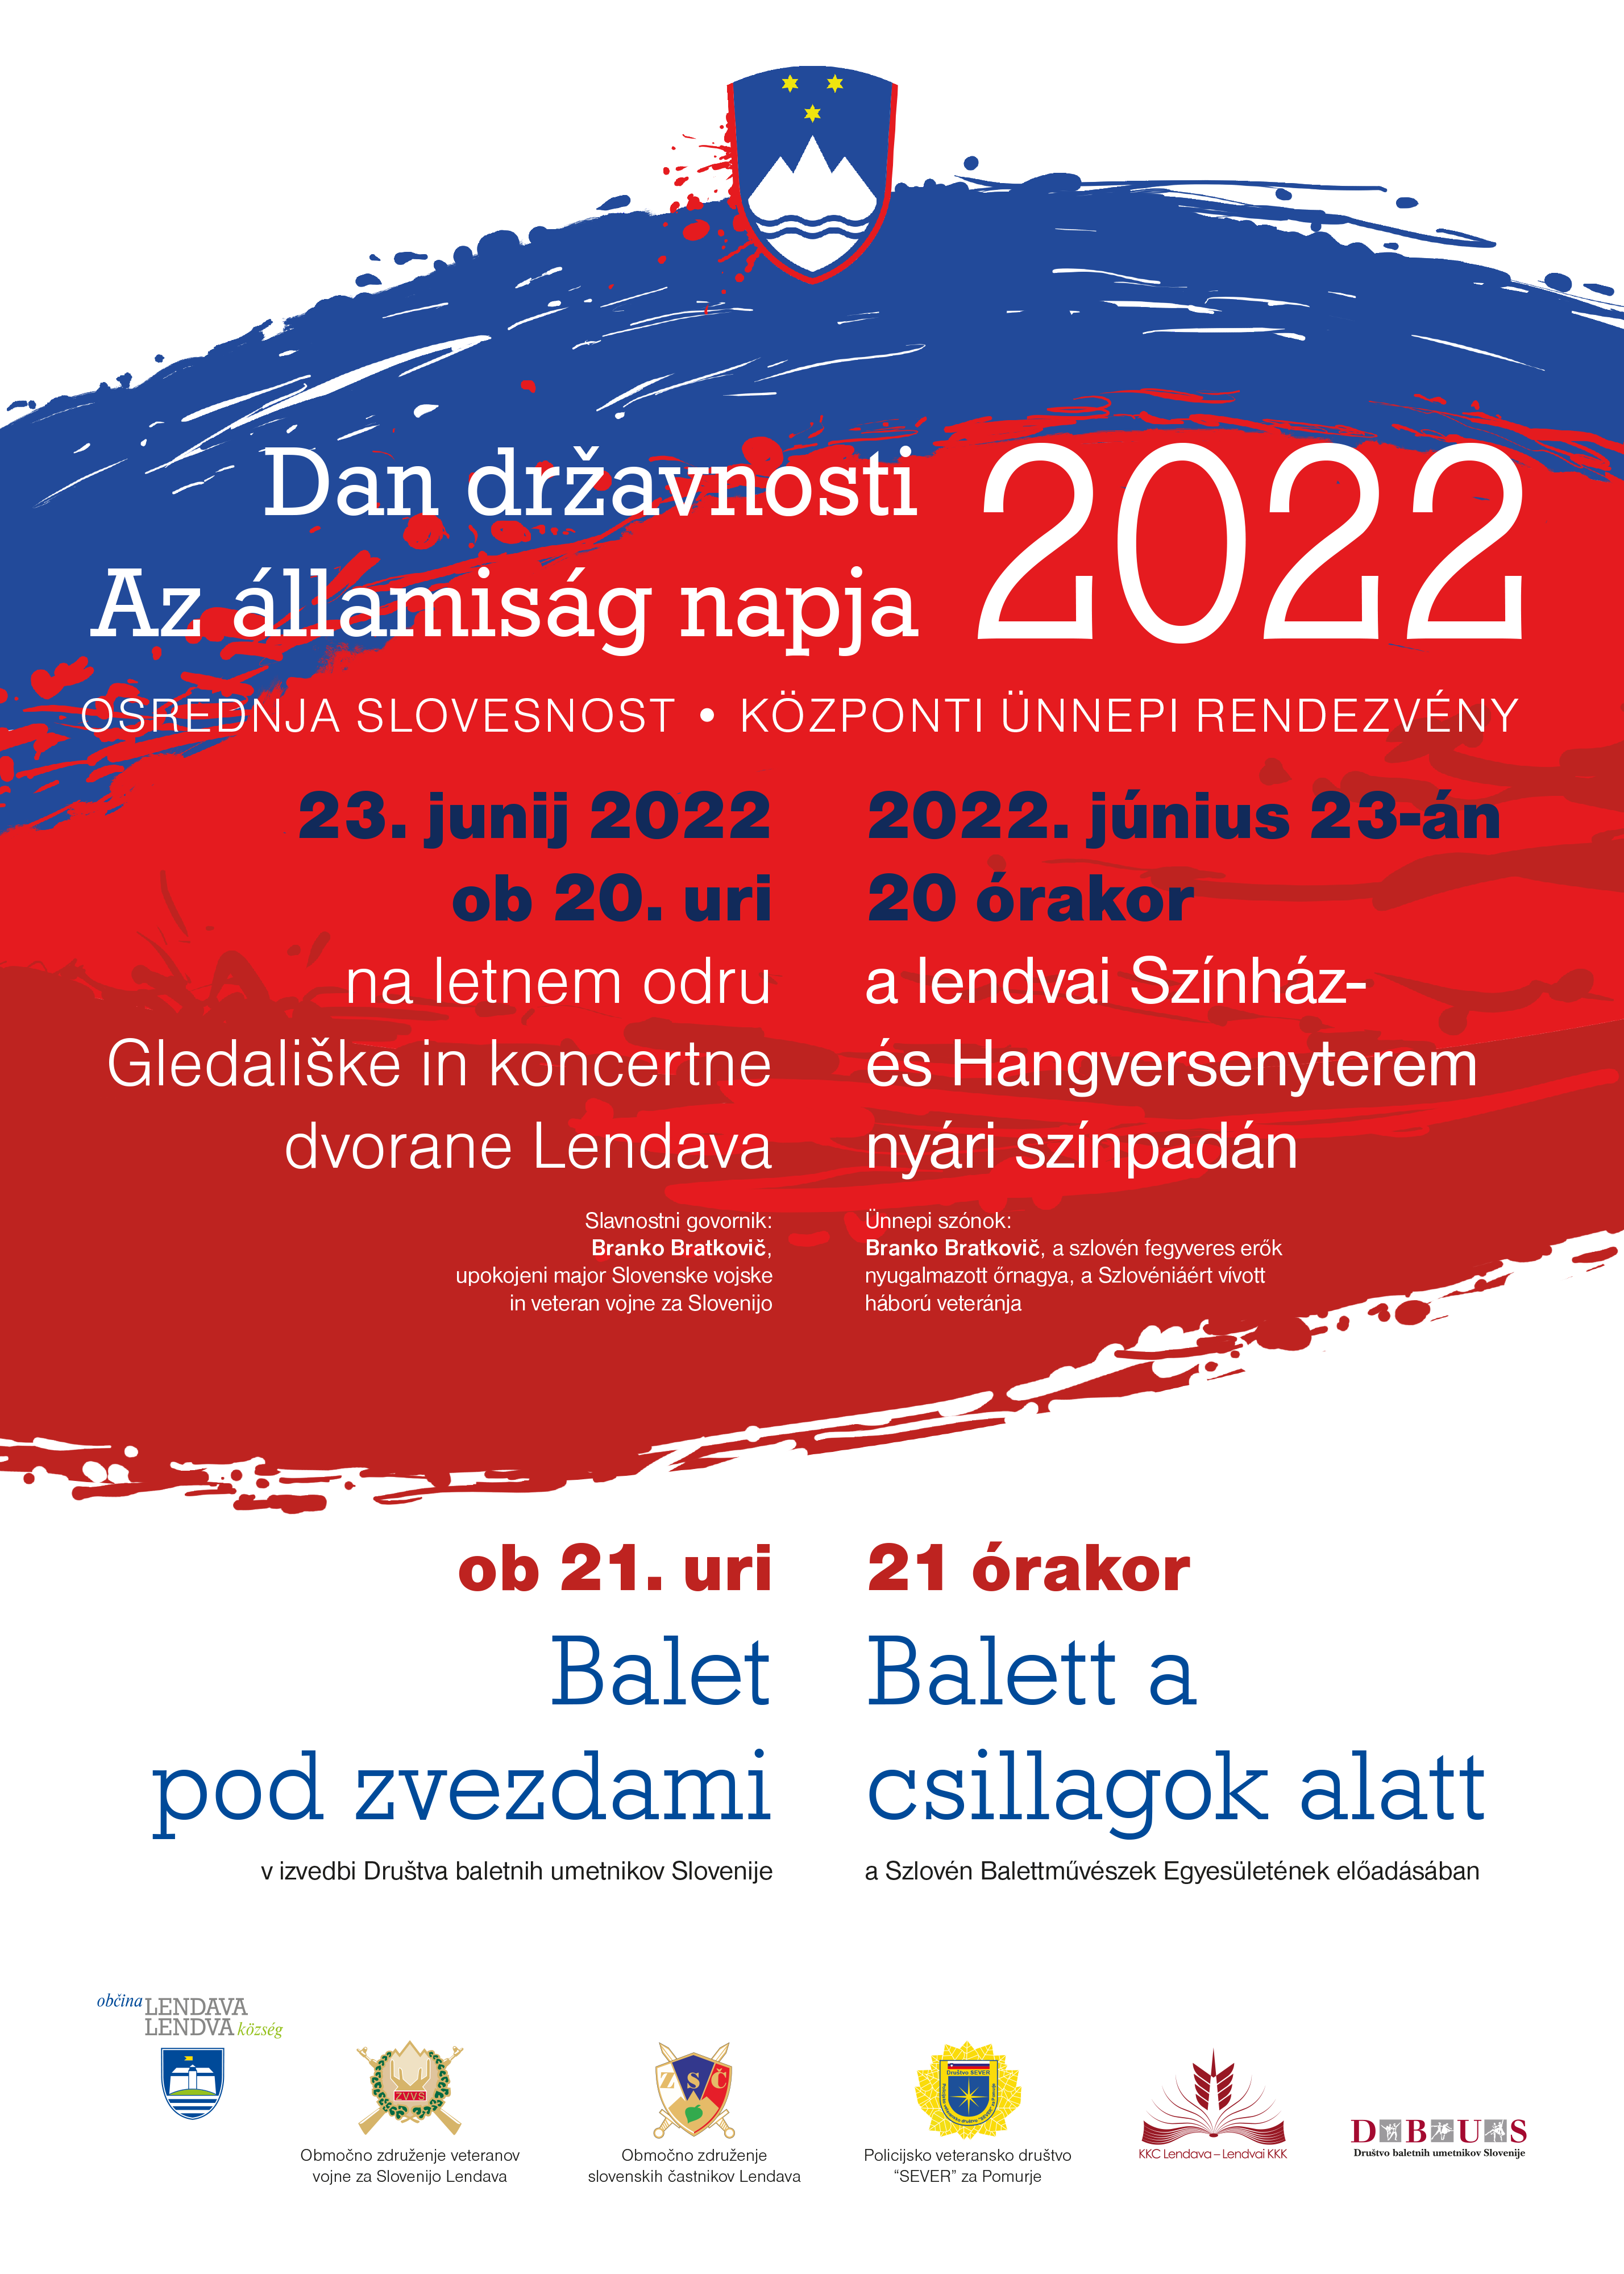 plakat_dan_drzavnosti_2022_70cm_A